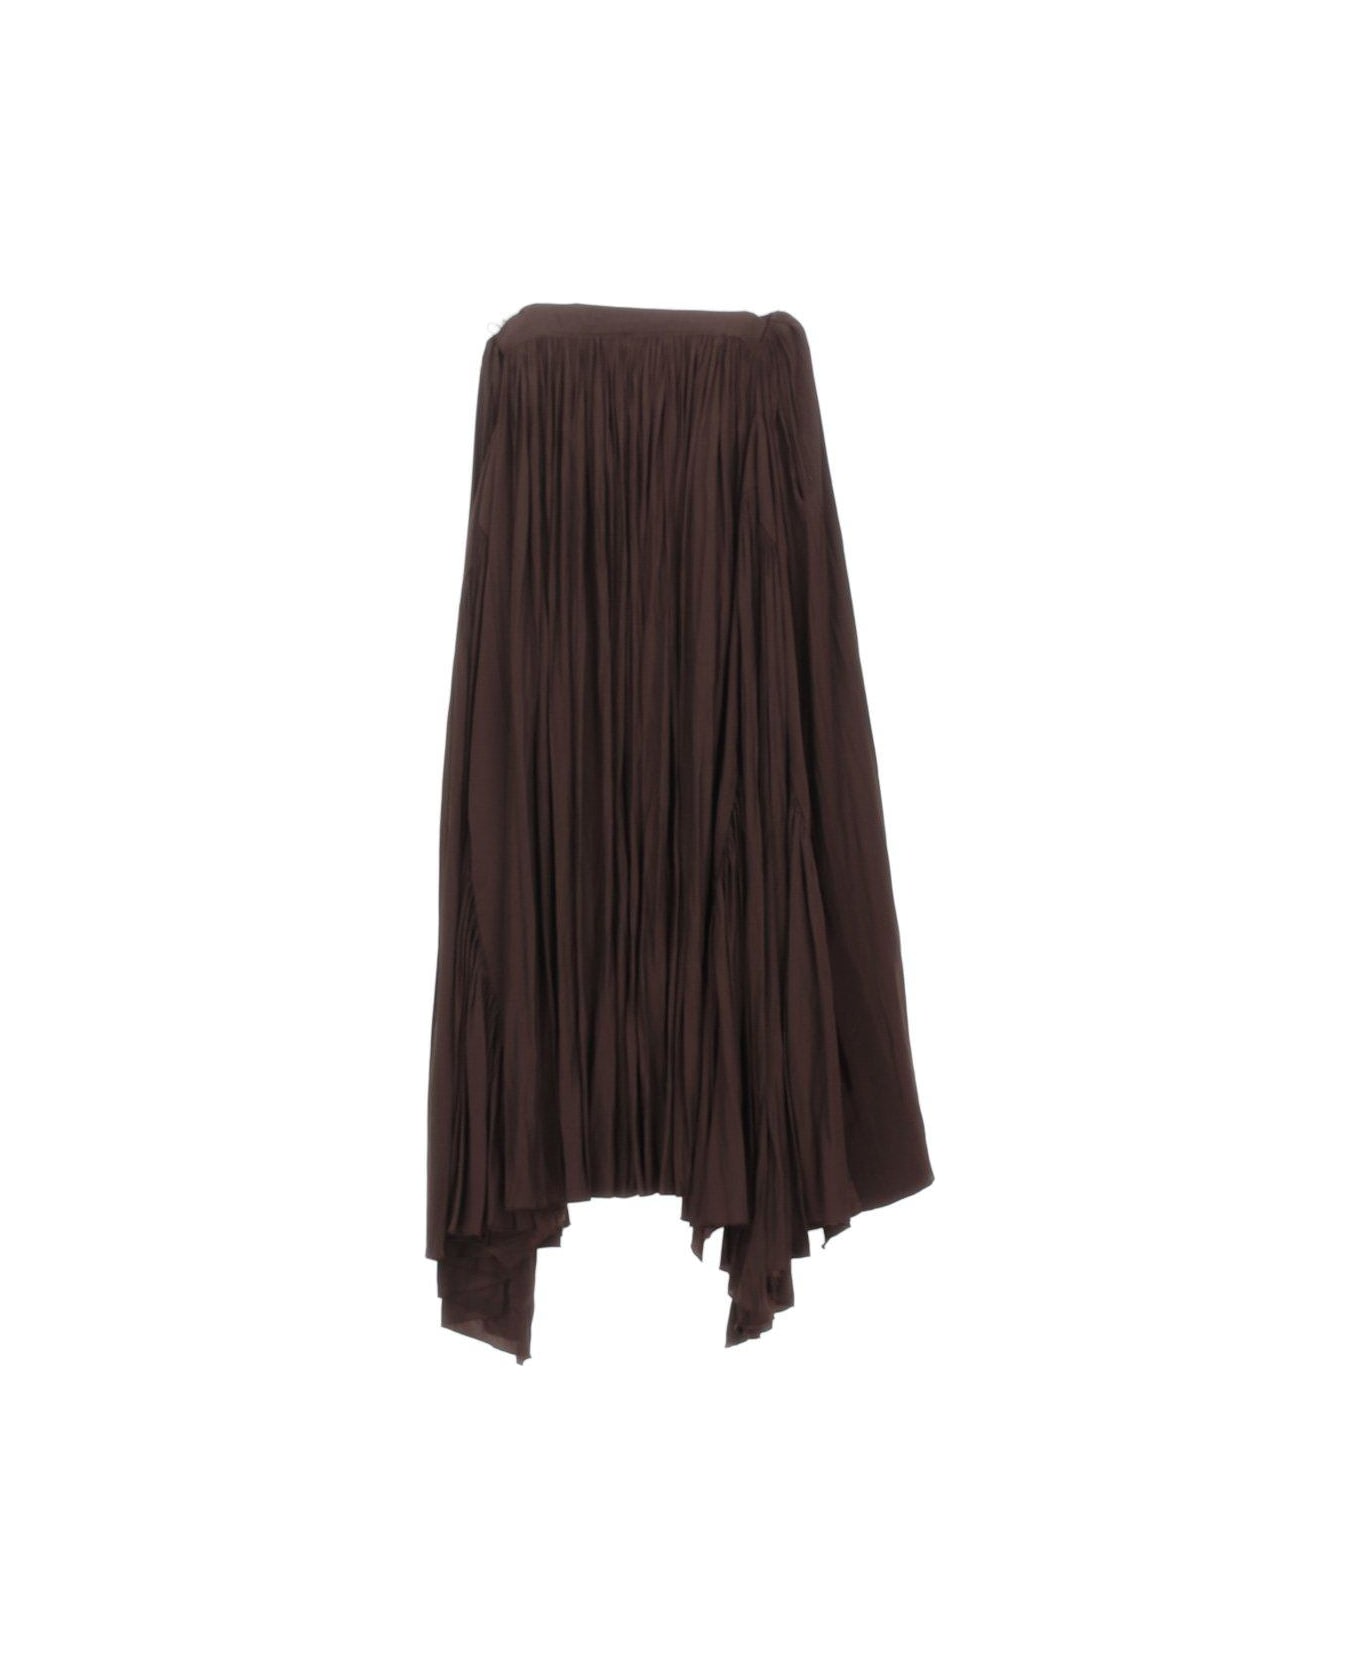 Lanvin High Waist Asymmetric Gathered Maxi Skirt - CACAO